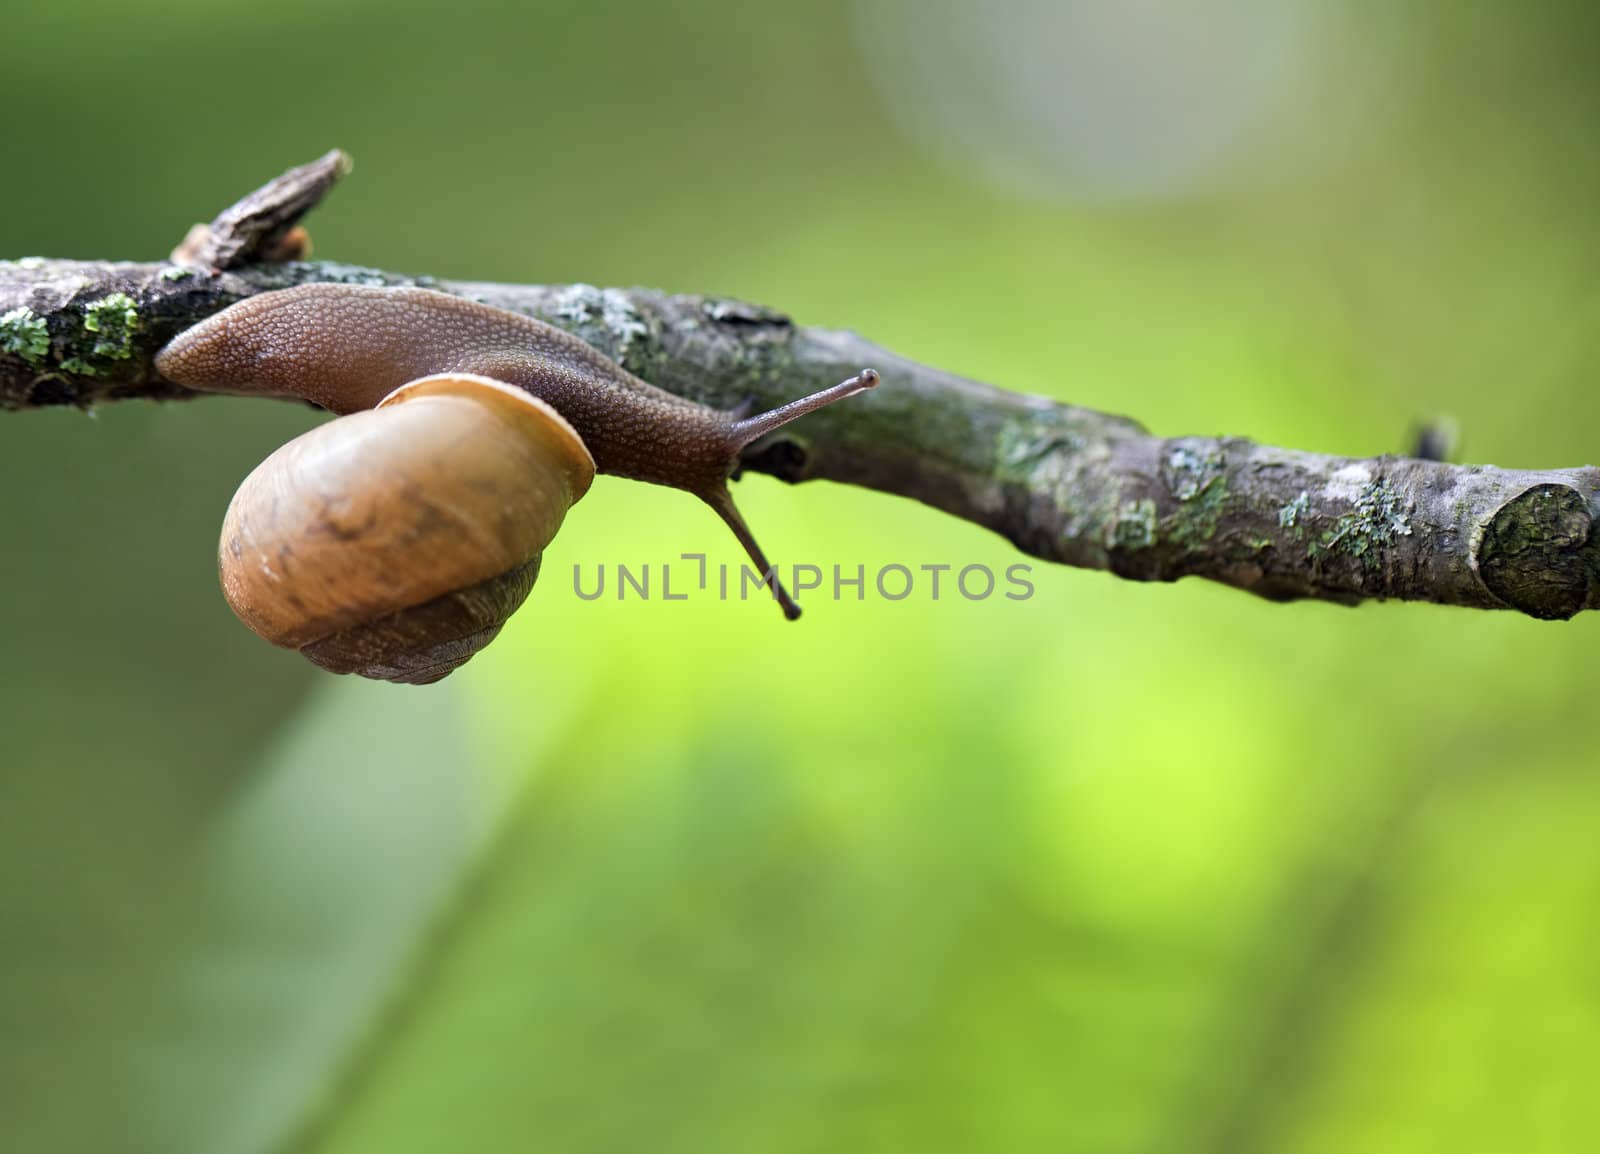 A close up shot of a snail climbing along a branch of a tree.